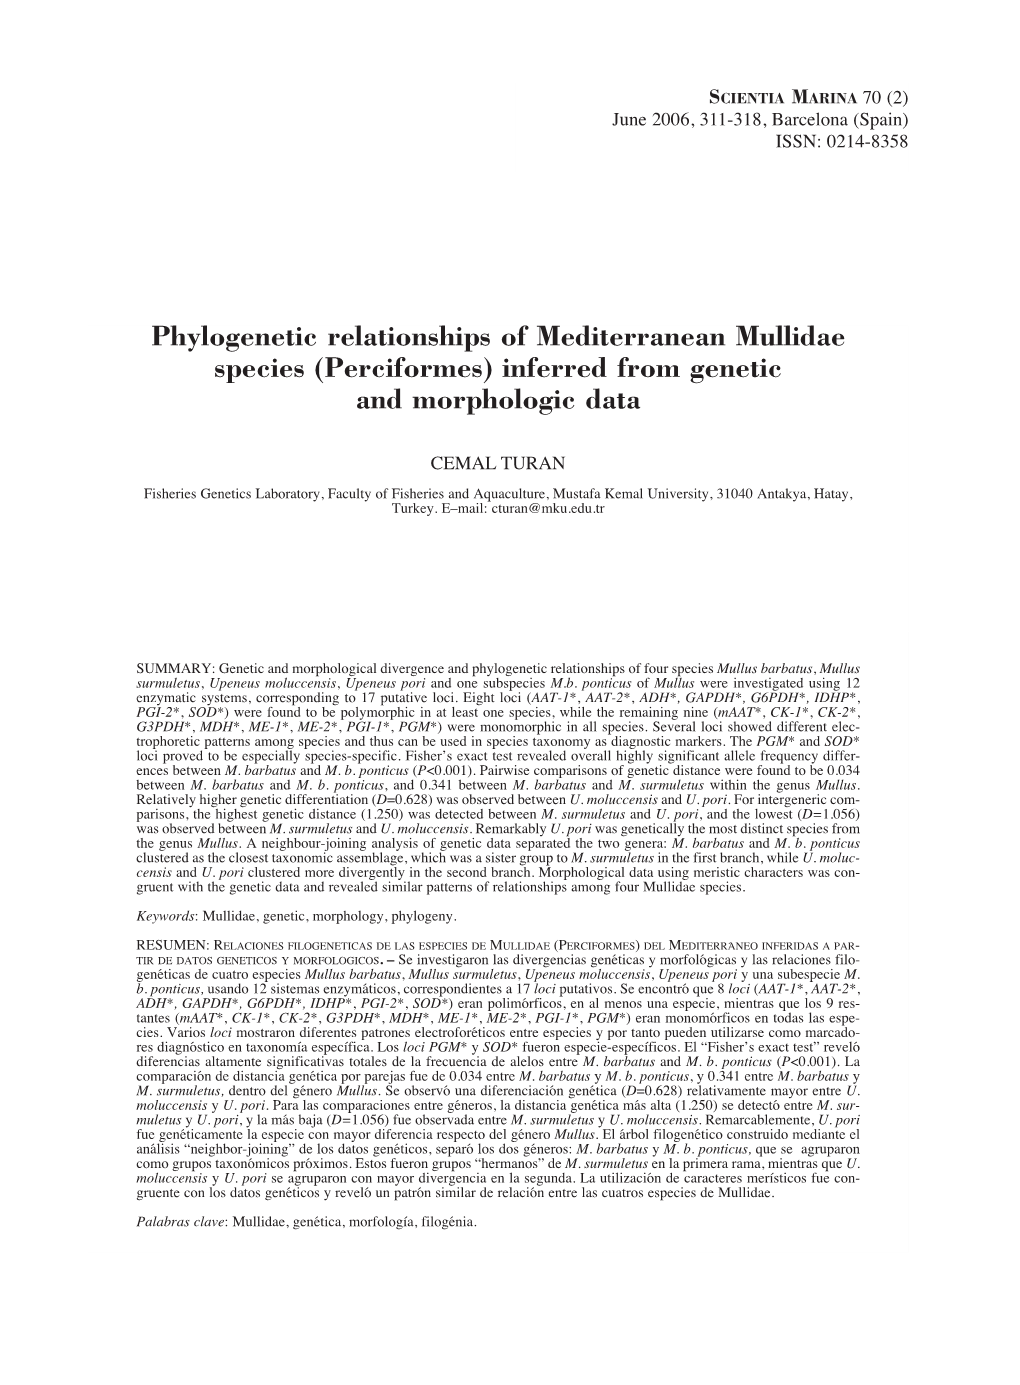 Phylogenetic Relationships of Mediterranean Mullidae Species (Perciformes) Inferred from Genetic and Morphologic Data